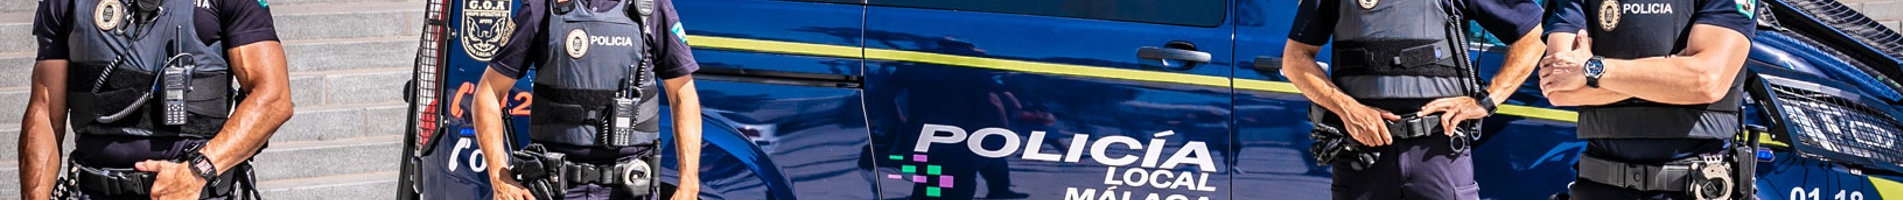 banner-policia-local